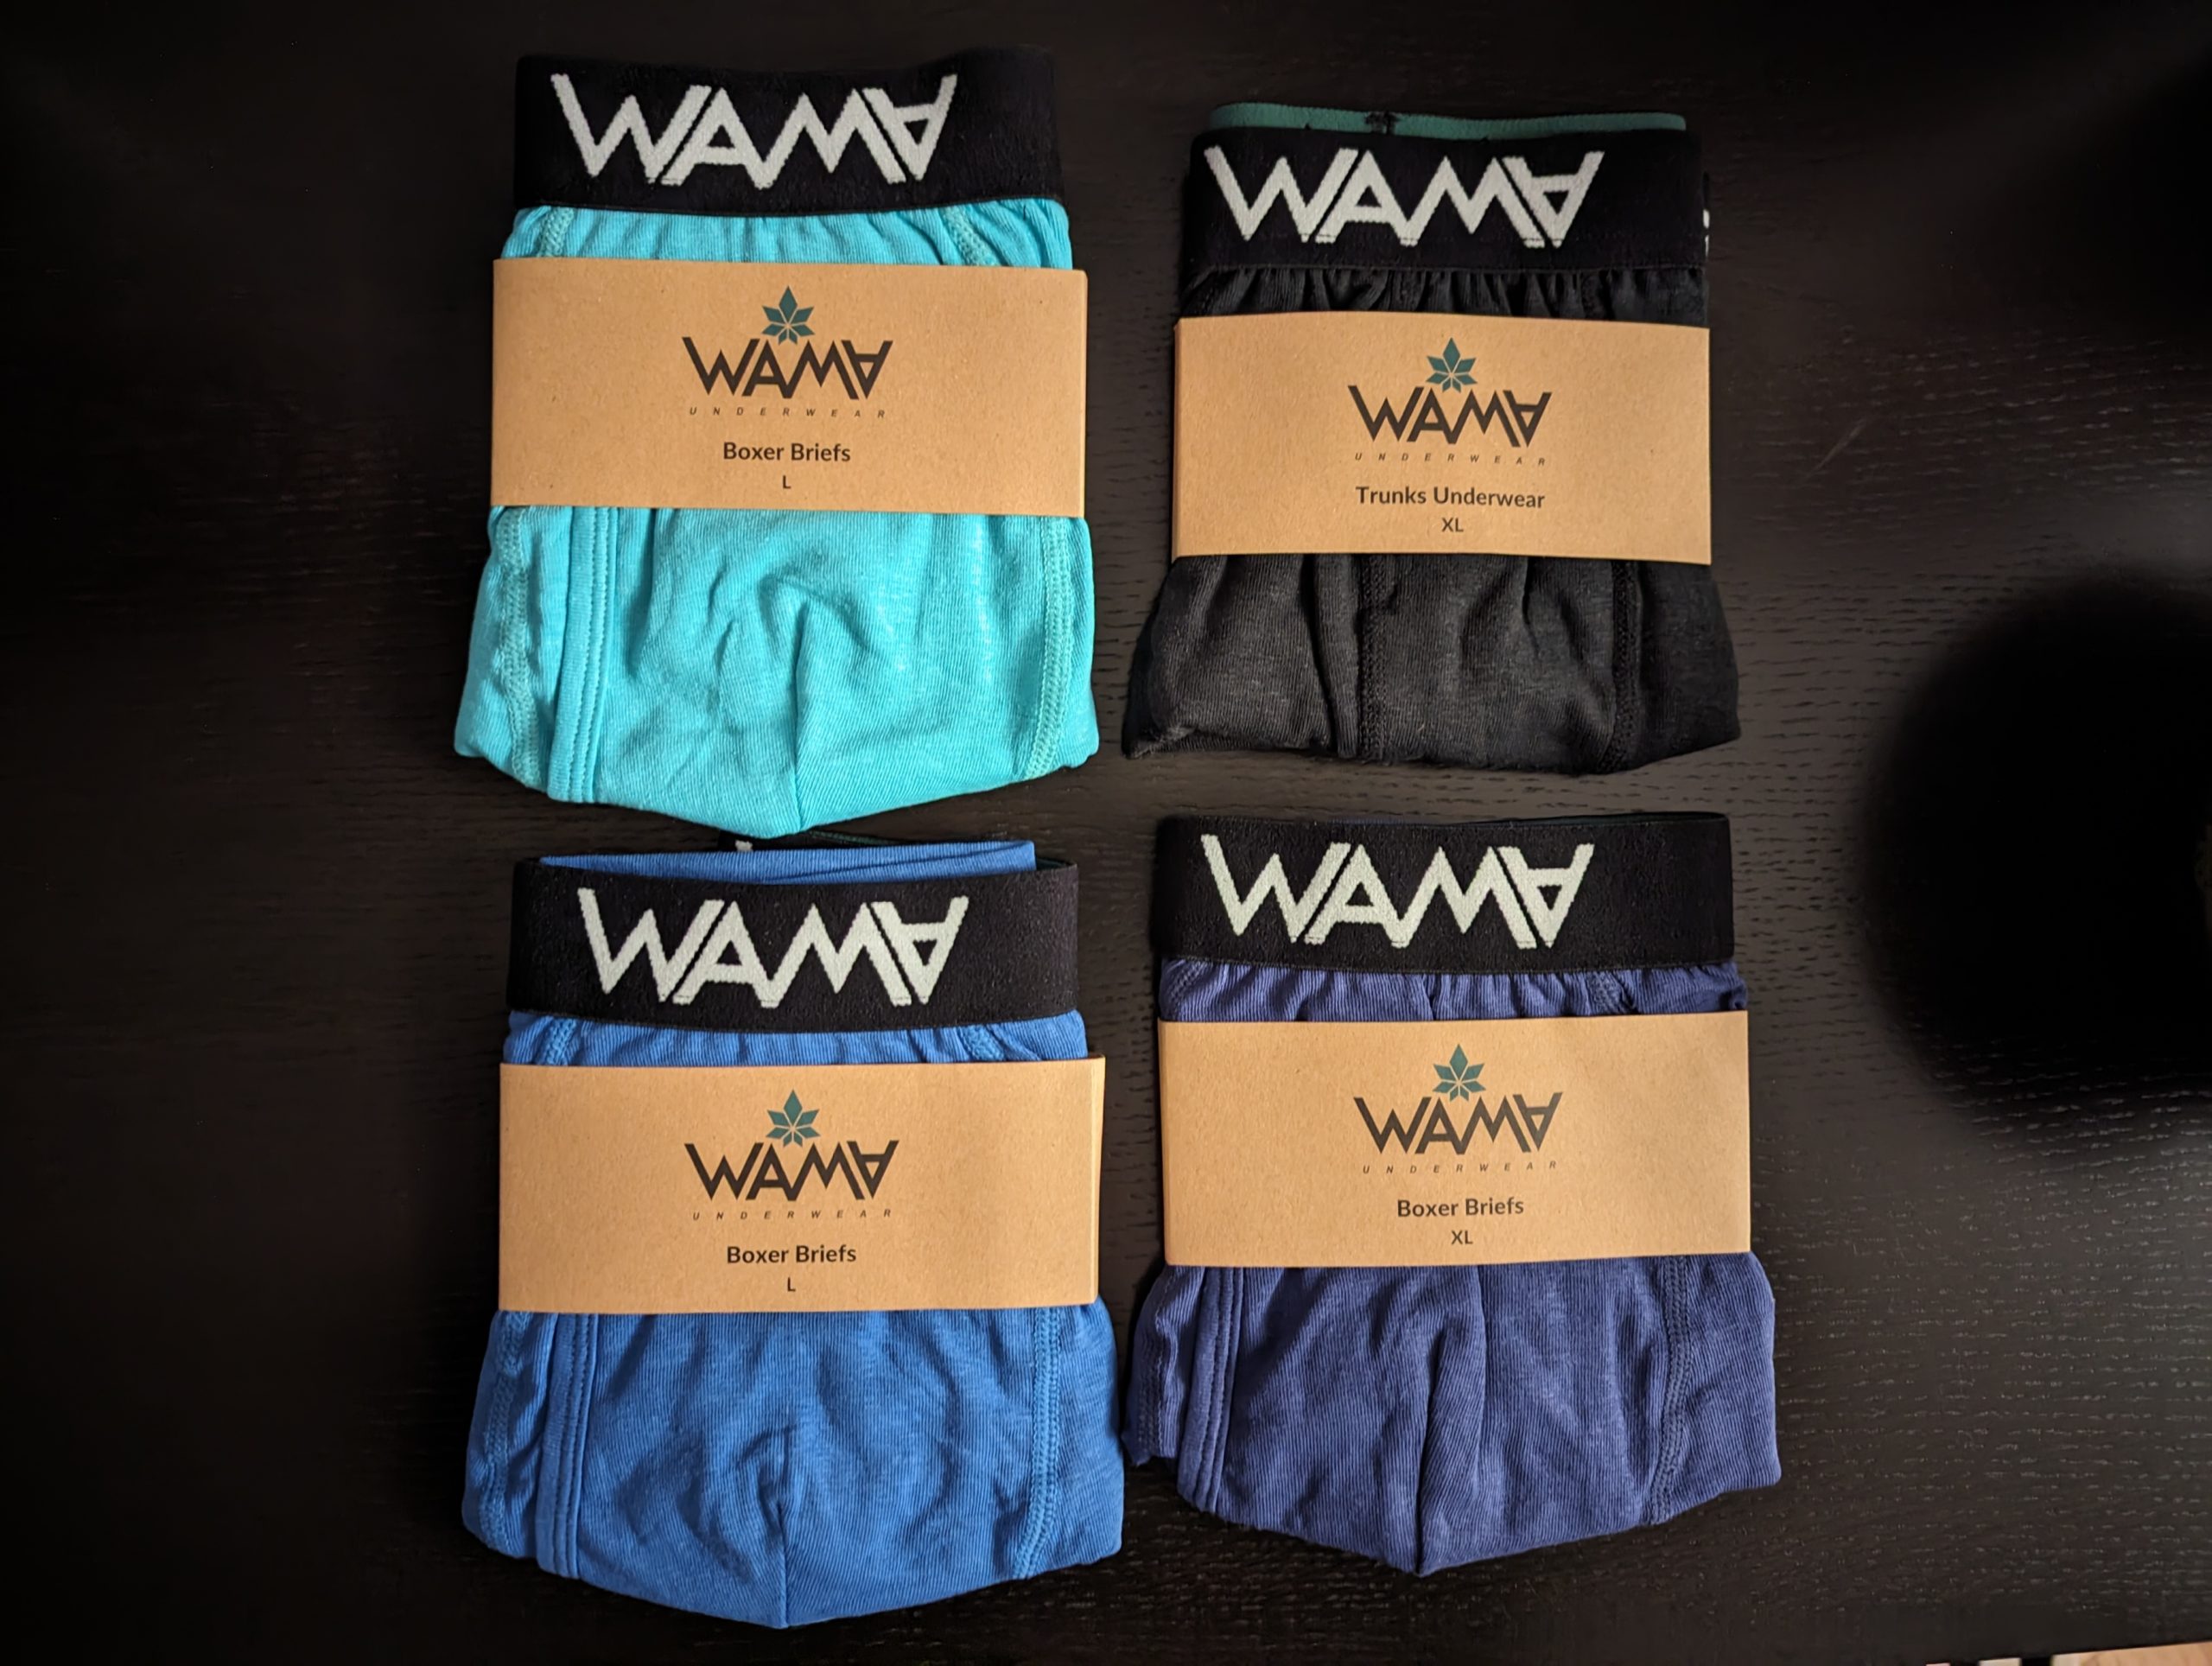 Buy WAMA - Hemp High Waisted Underwear Online - Hemp Store